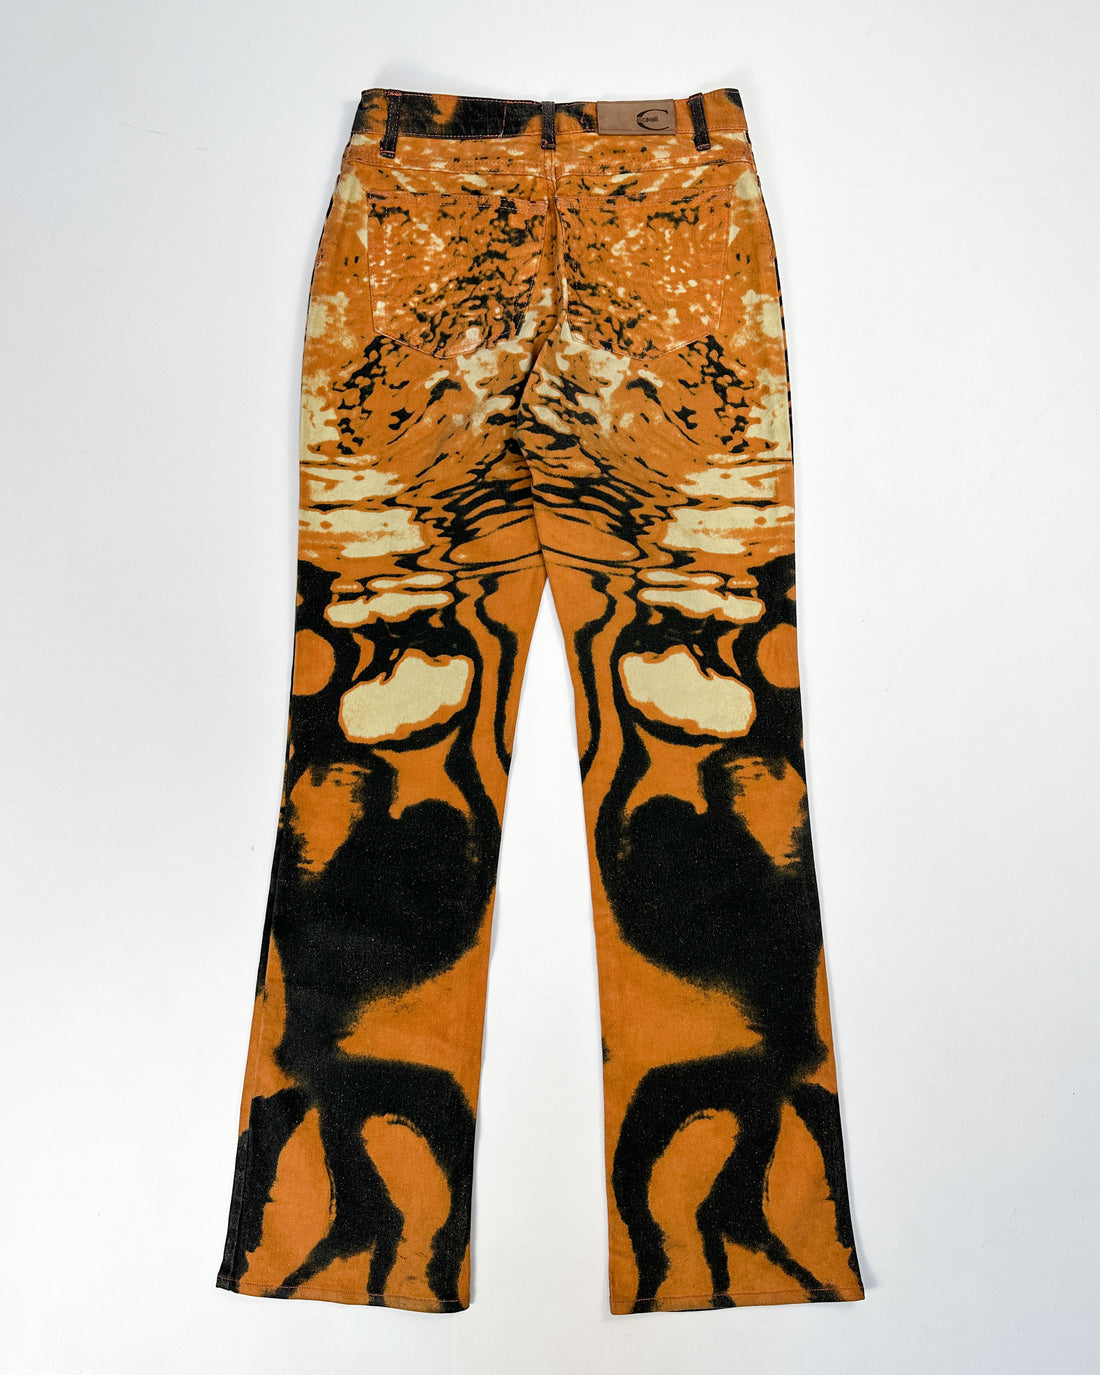 Roberto Cavalli Psychedelic Printed Pants 2000's